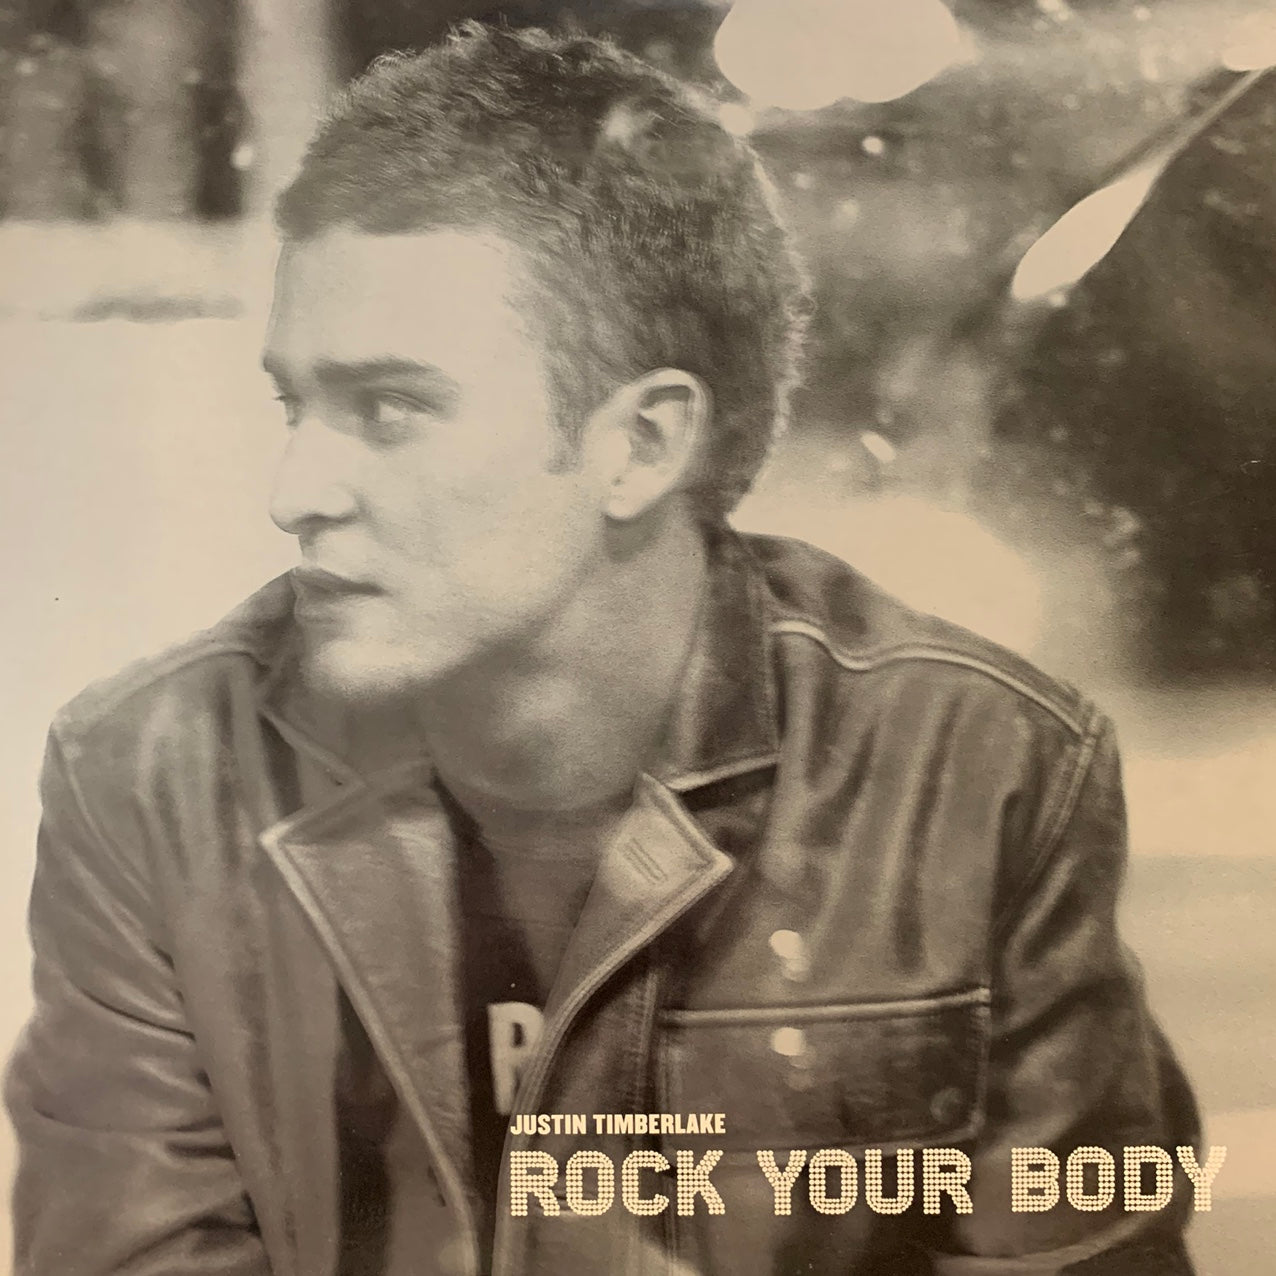 Justin Timberlake “Rock Your Body” The Sander Kleinenbergs remixes 2 Track 12inch Vinyl